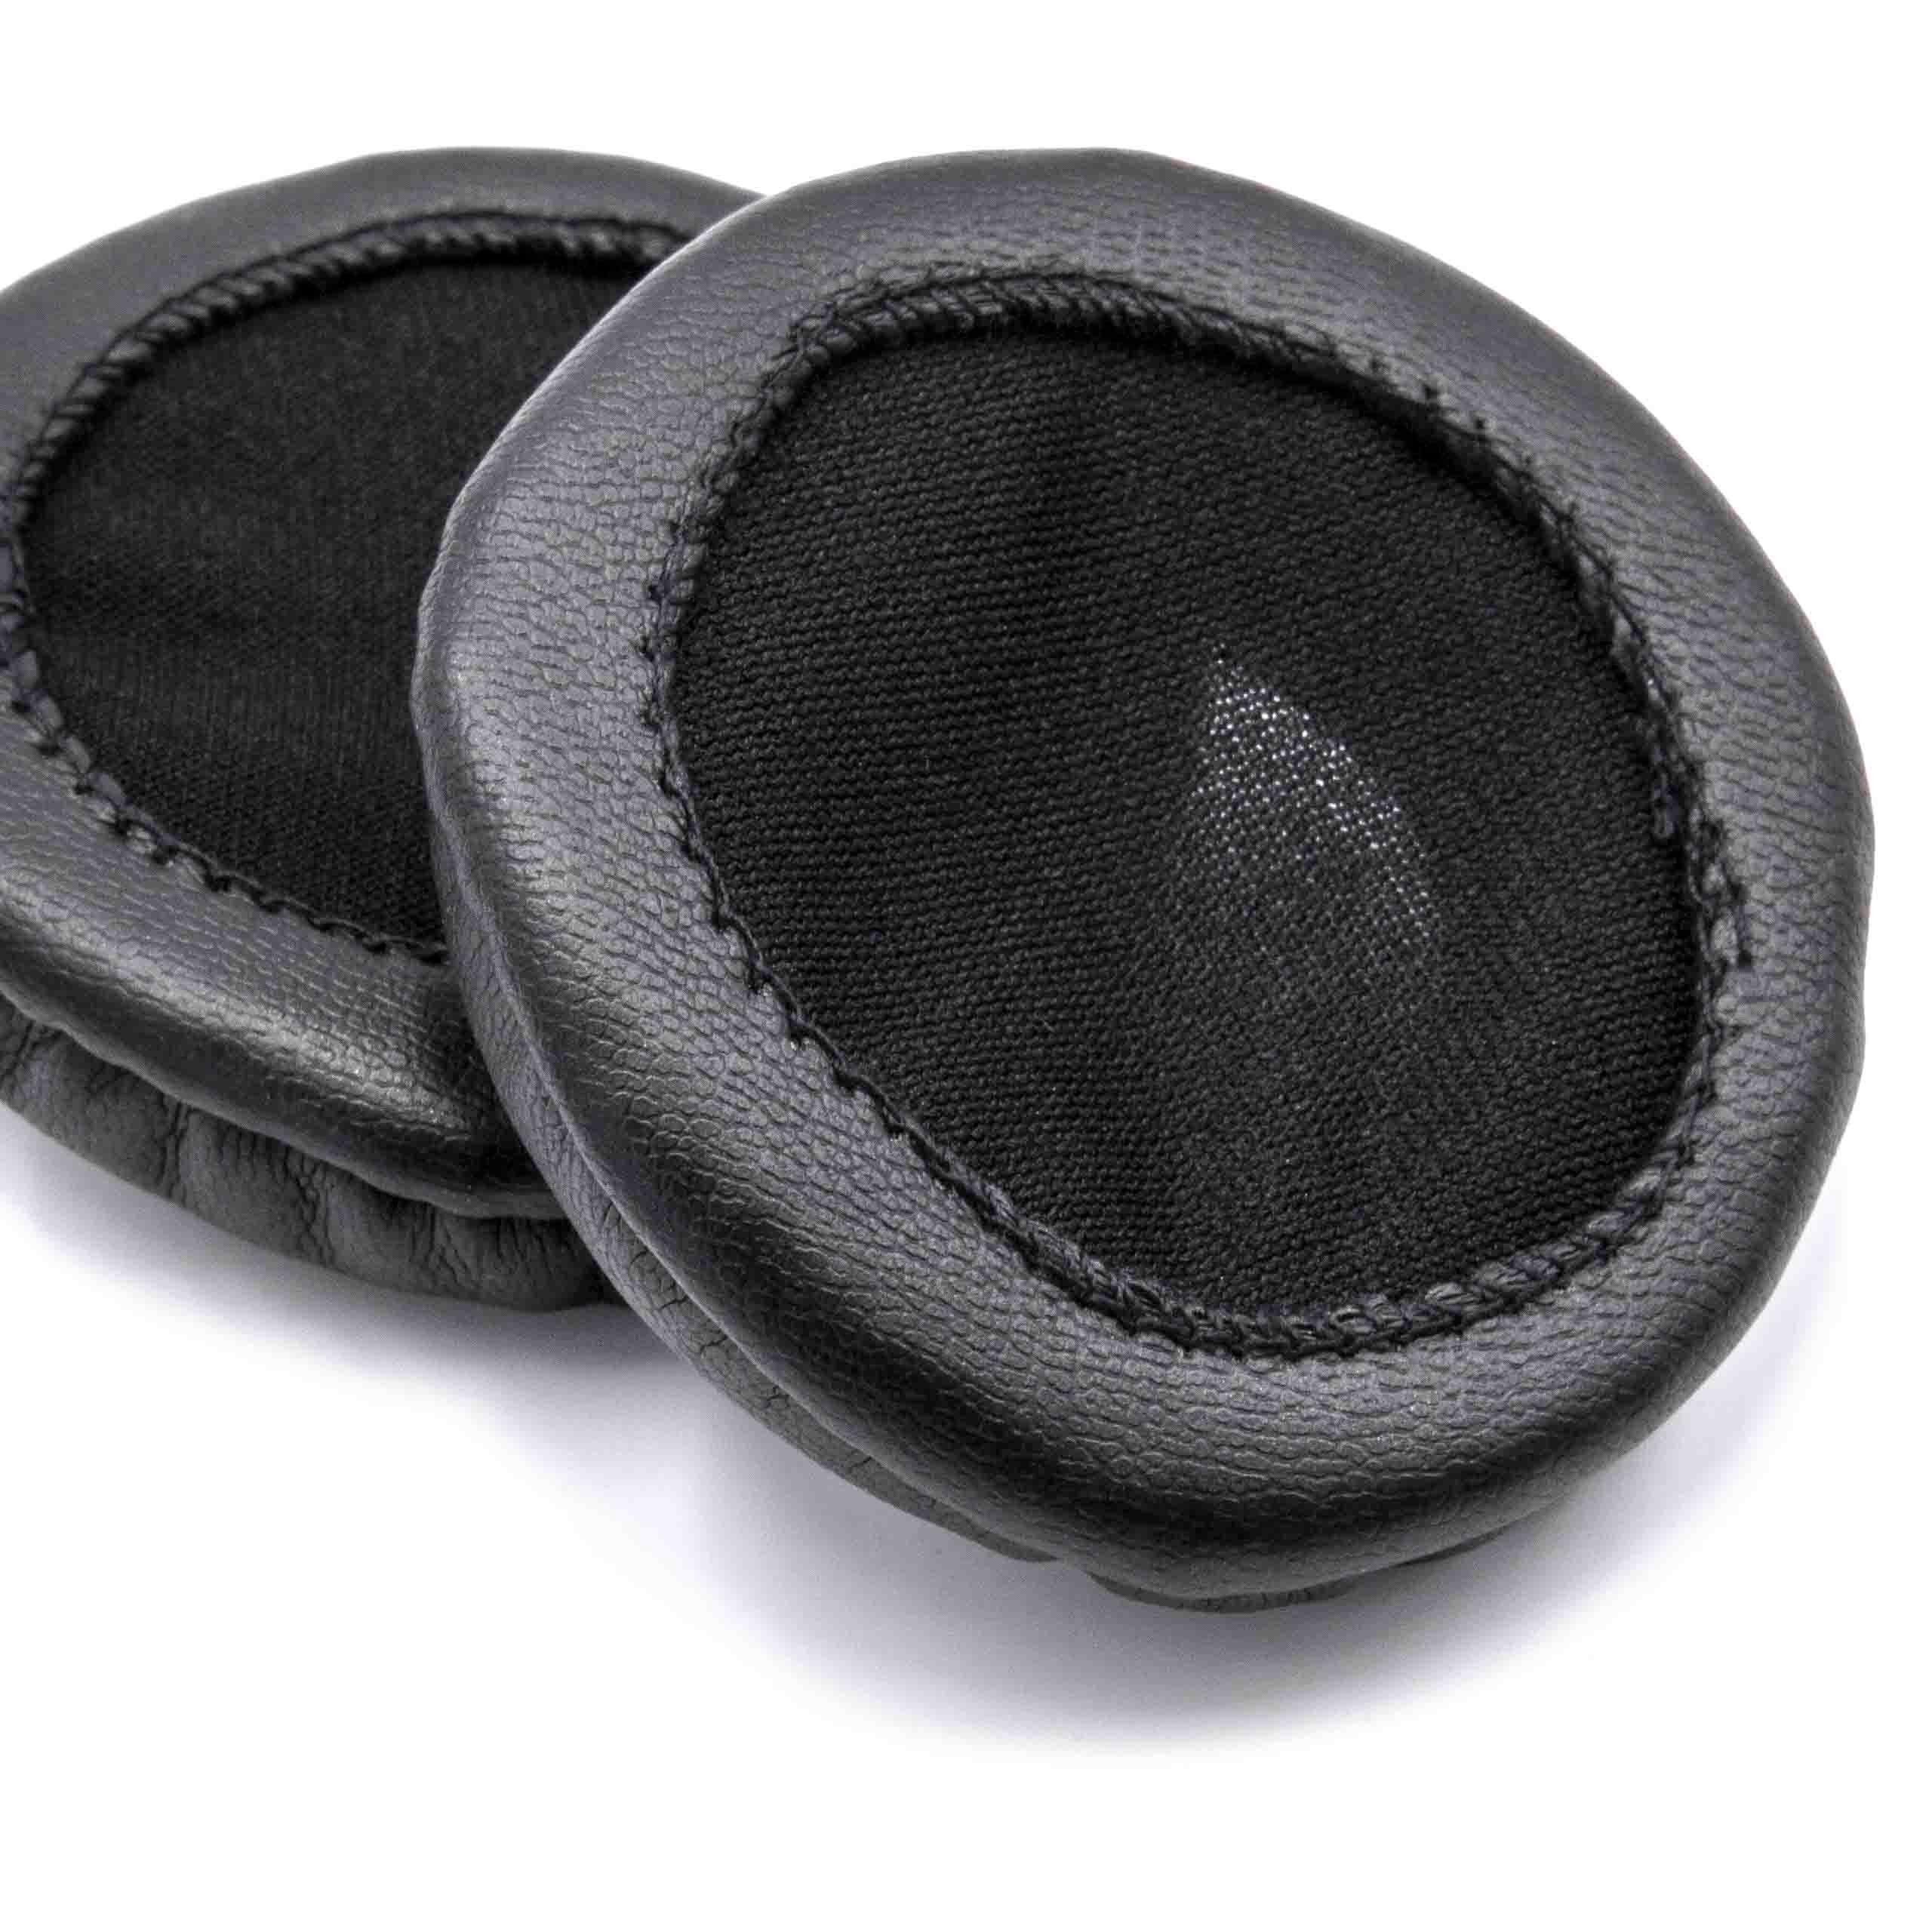 für passend die benötigen Kopfhörer 60mm Ohrpolster Ohrpolster Kopfhörer, vhbw